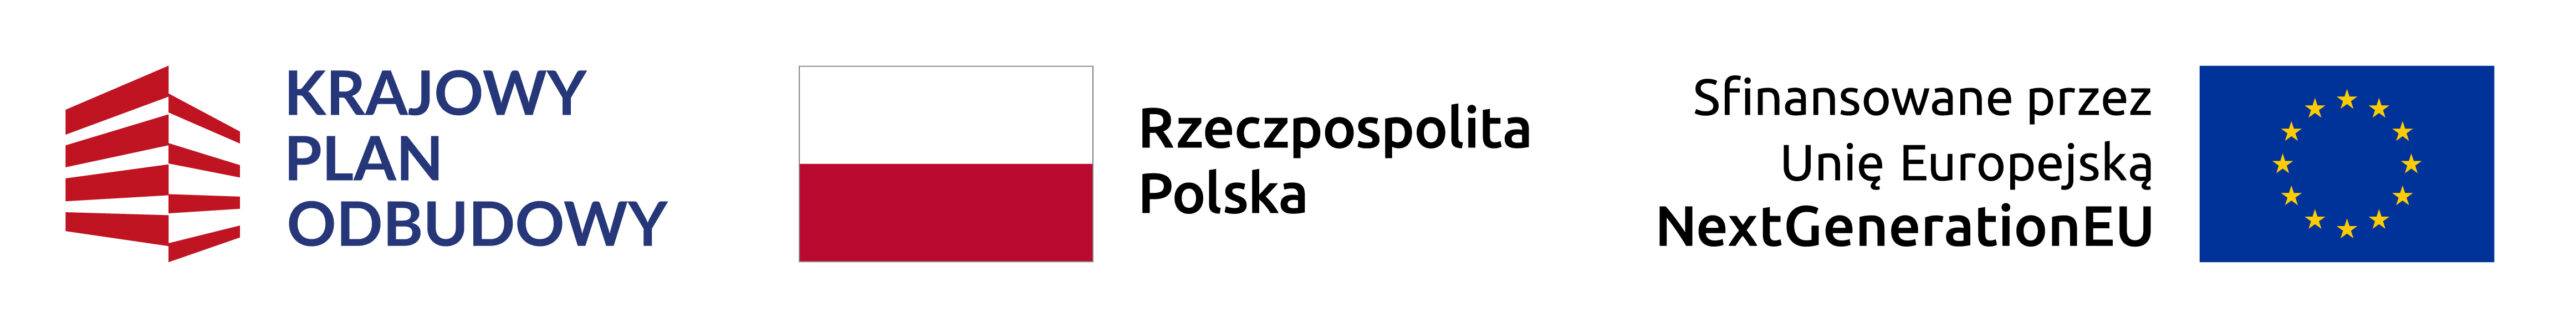 Logotypy KPO